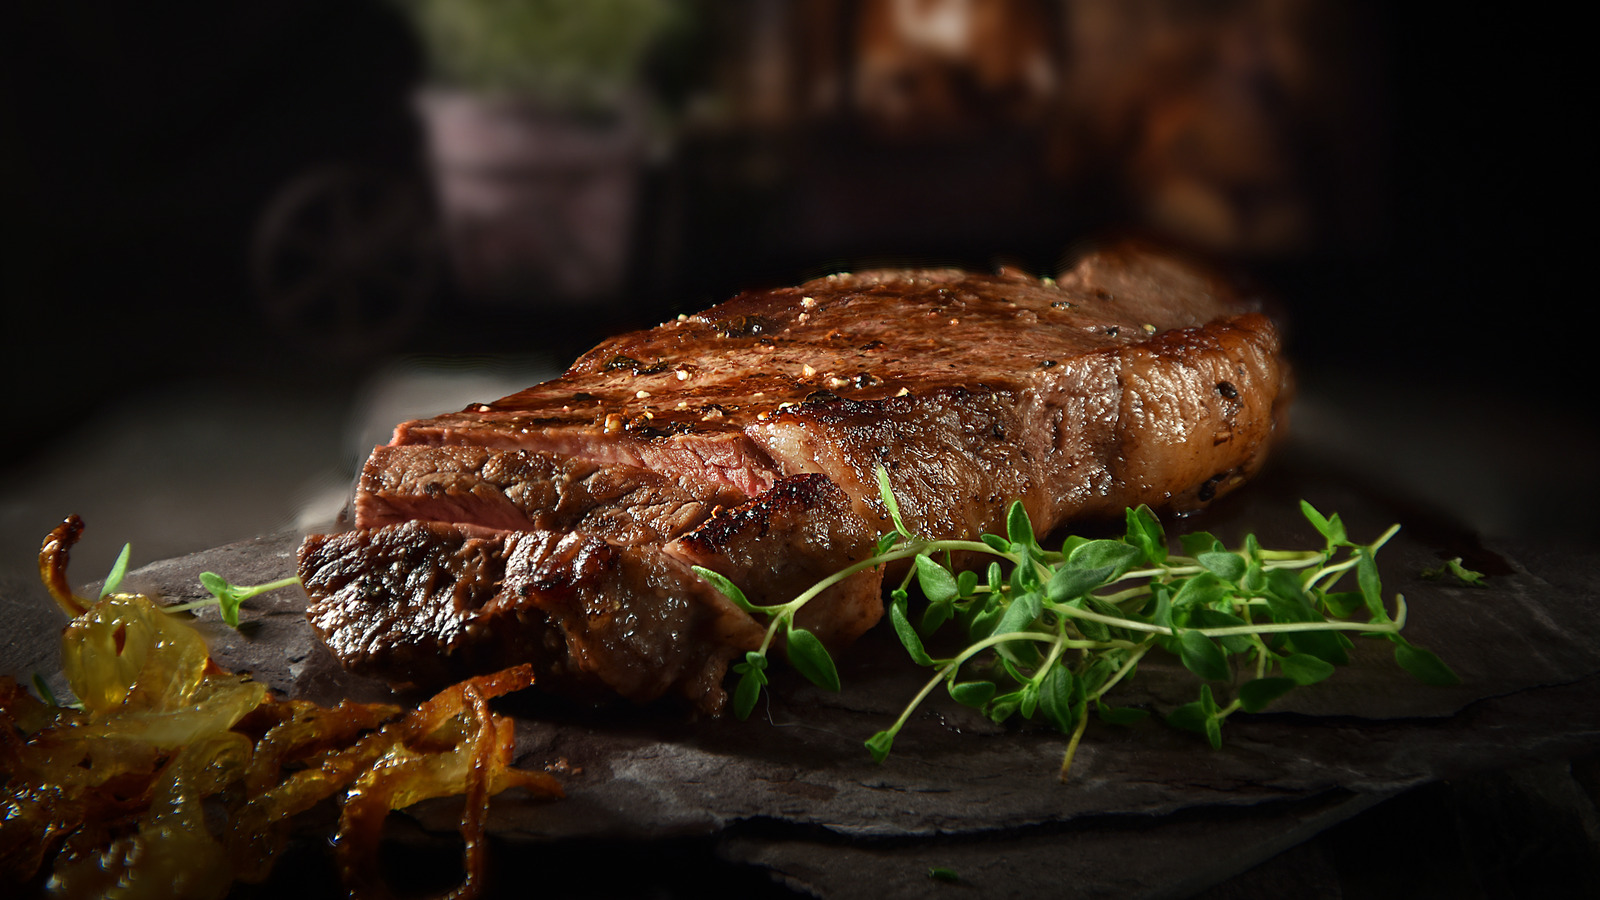 https://www.tastingtable.com/img/gallery/the-best-type-of-pan-for-searing-steak/l-intro-1673385833.jpg